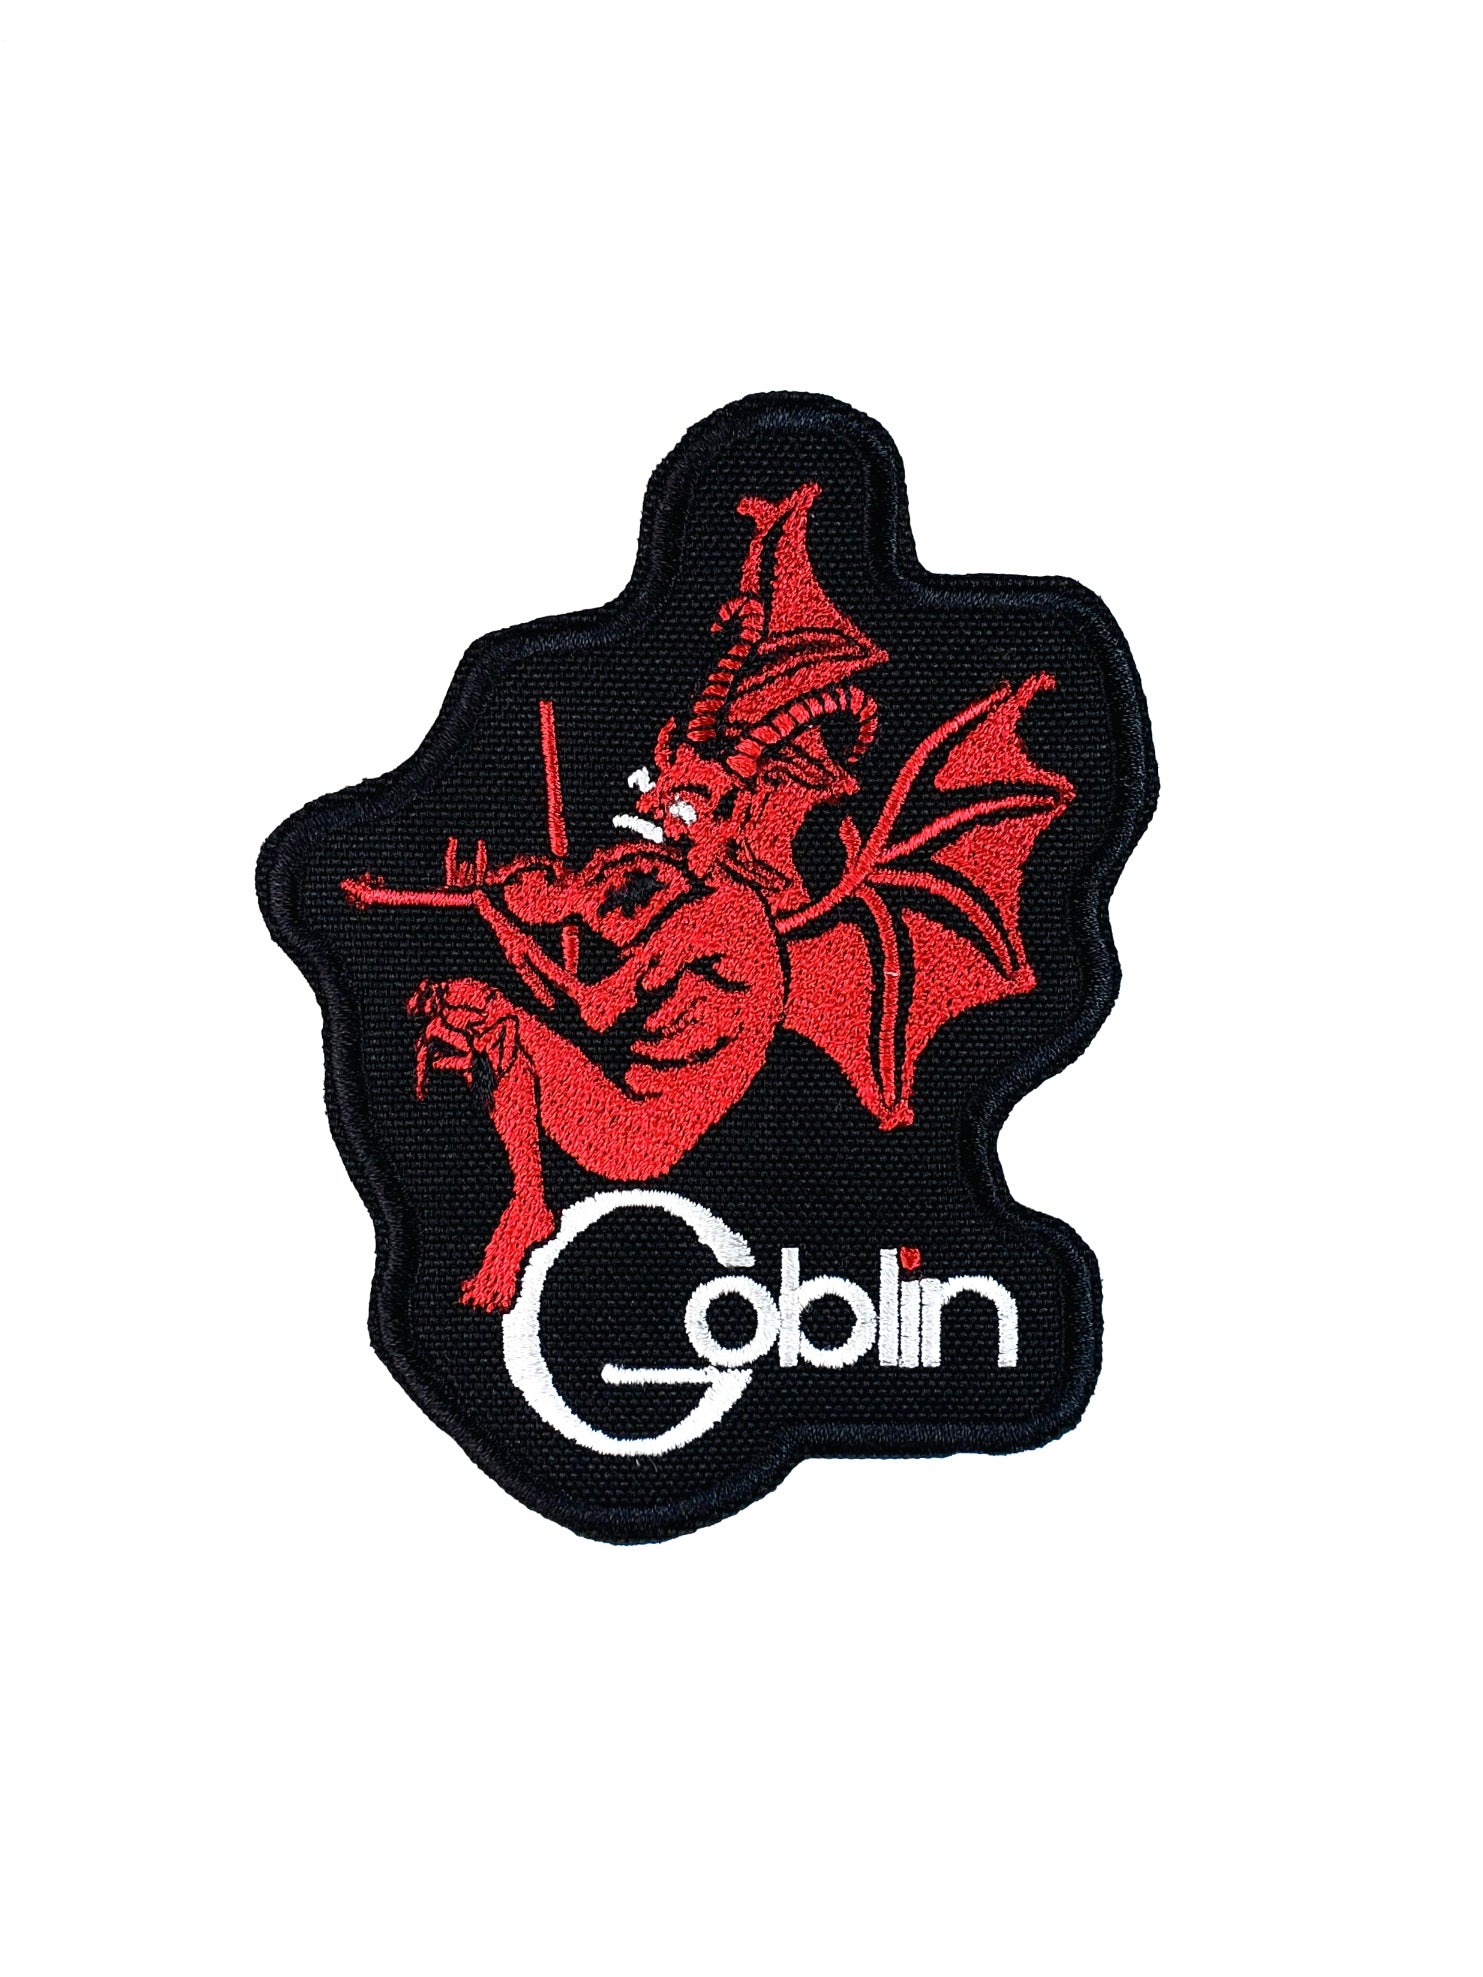 Goblin Roller Patch